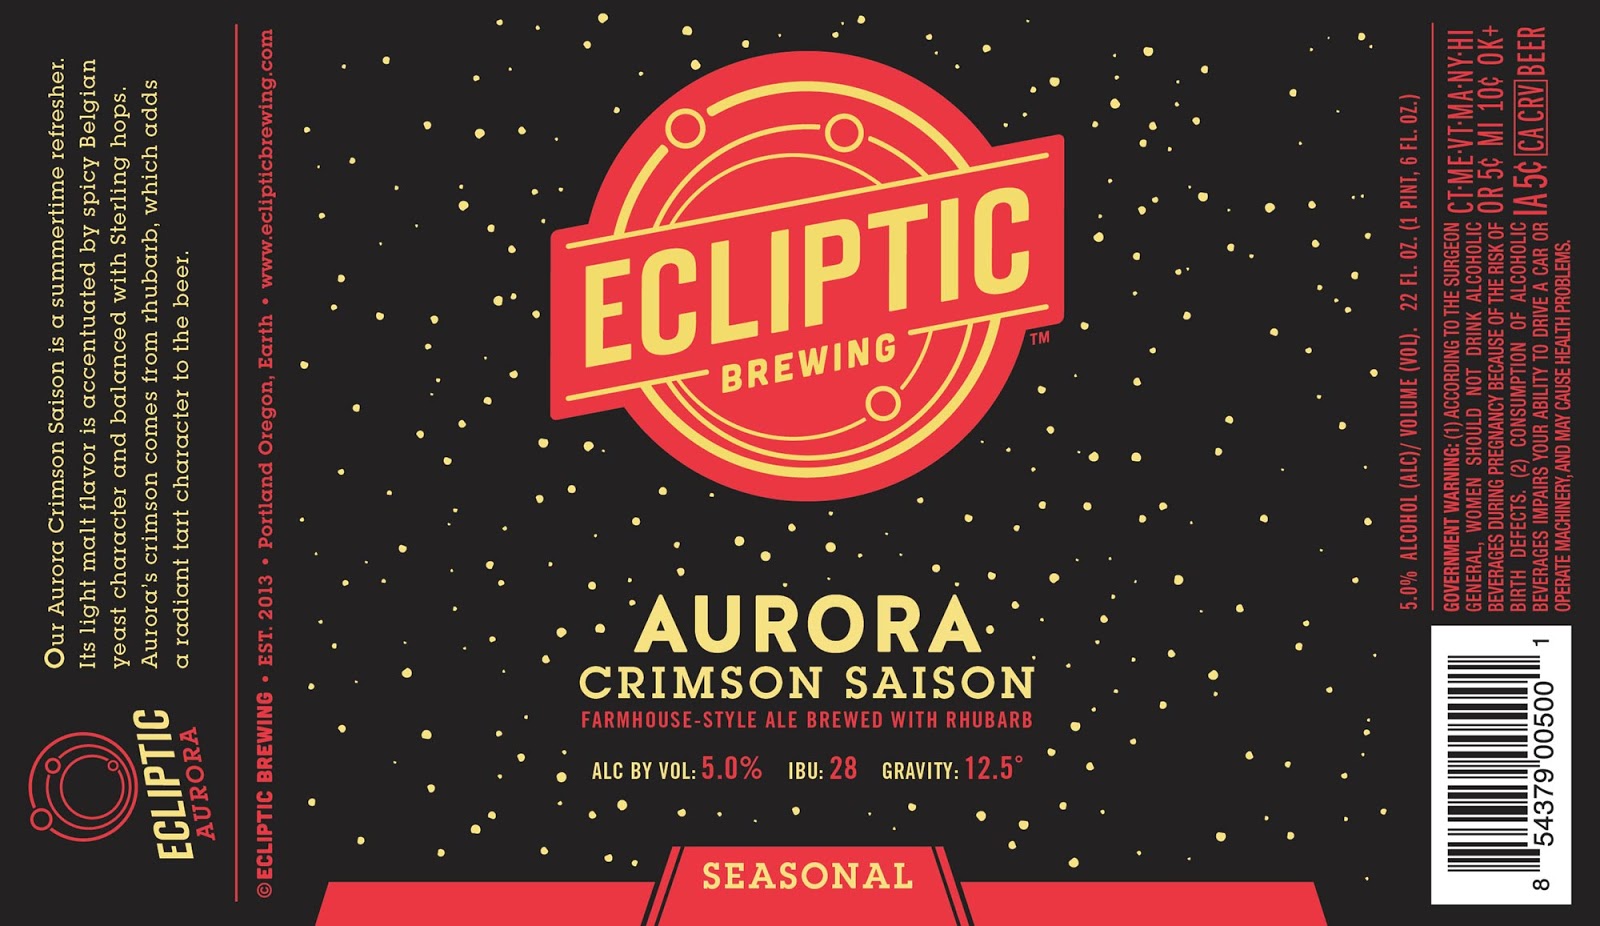 Ecliptic Brewing Aurora Crimson Saison